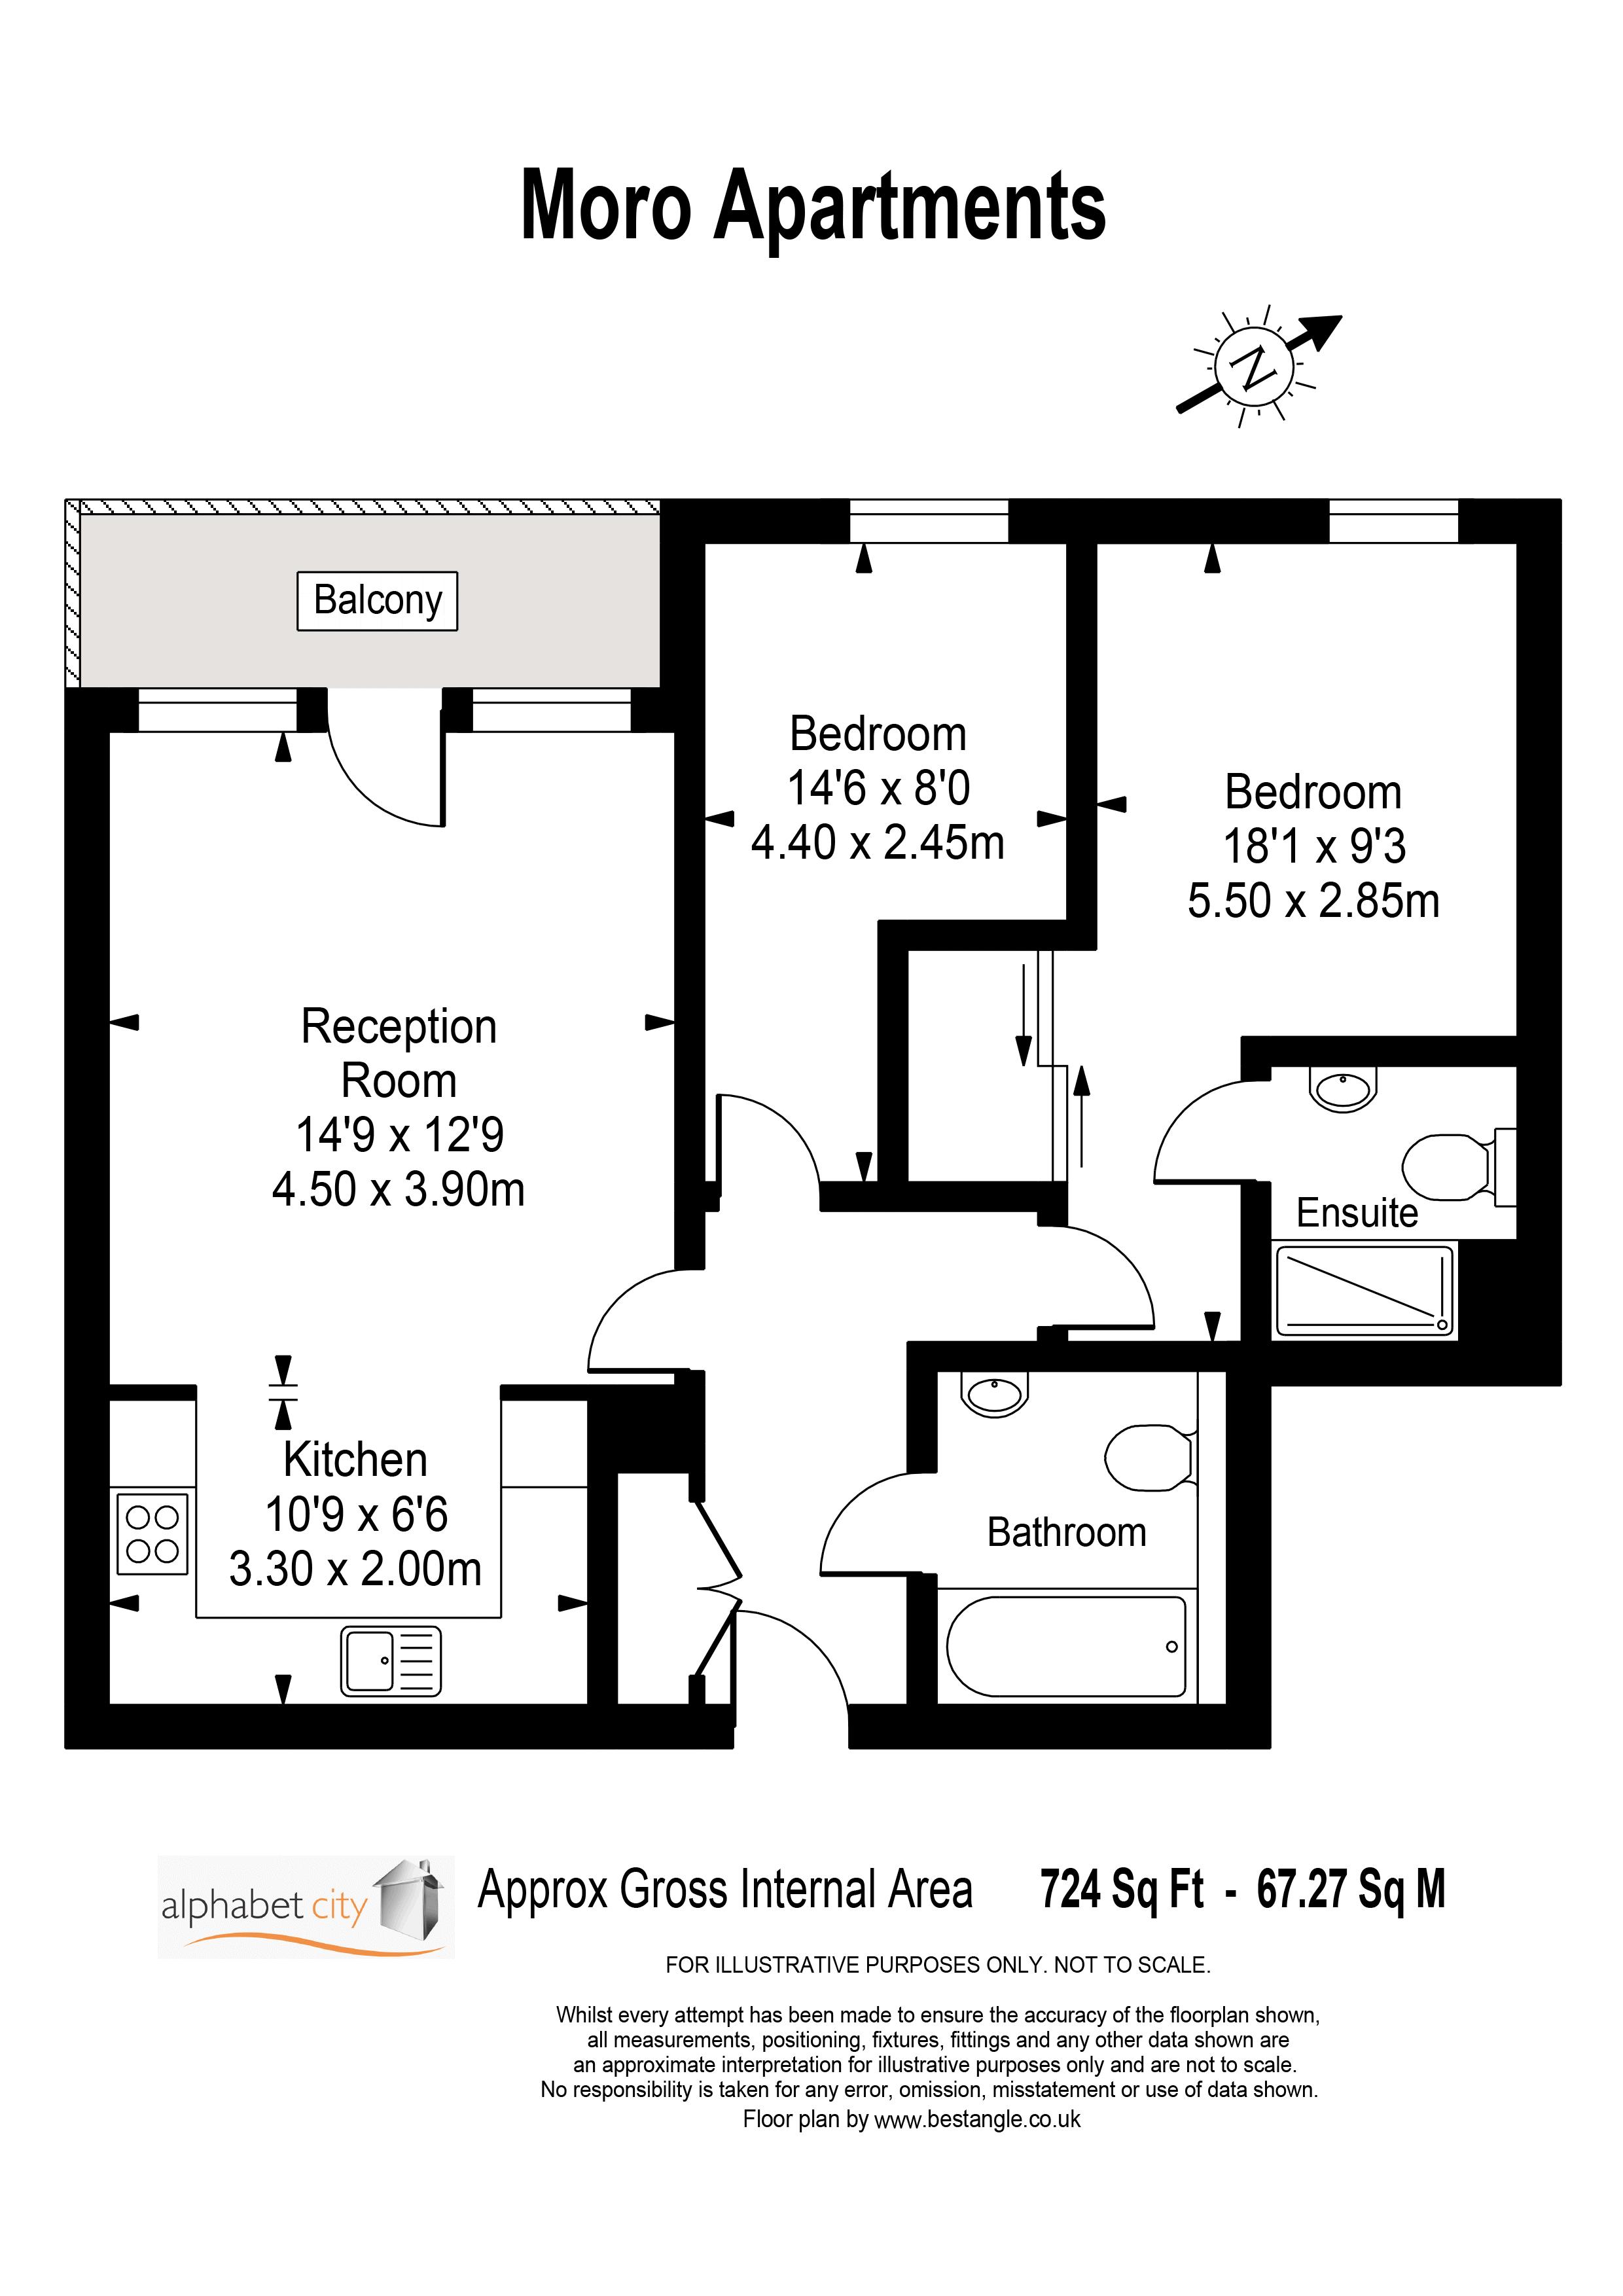 Moro Apartments Floorplan